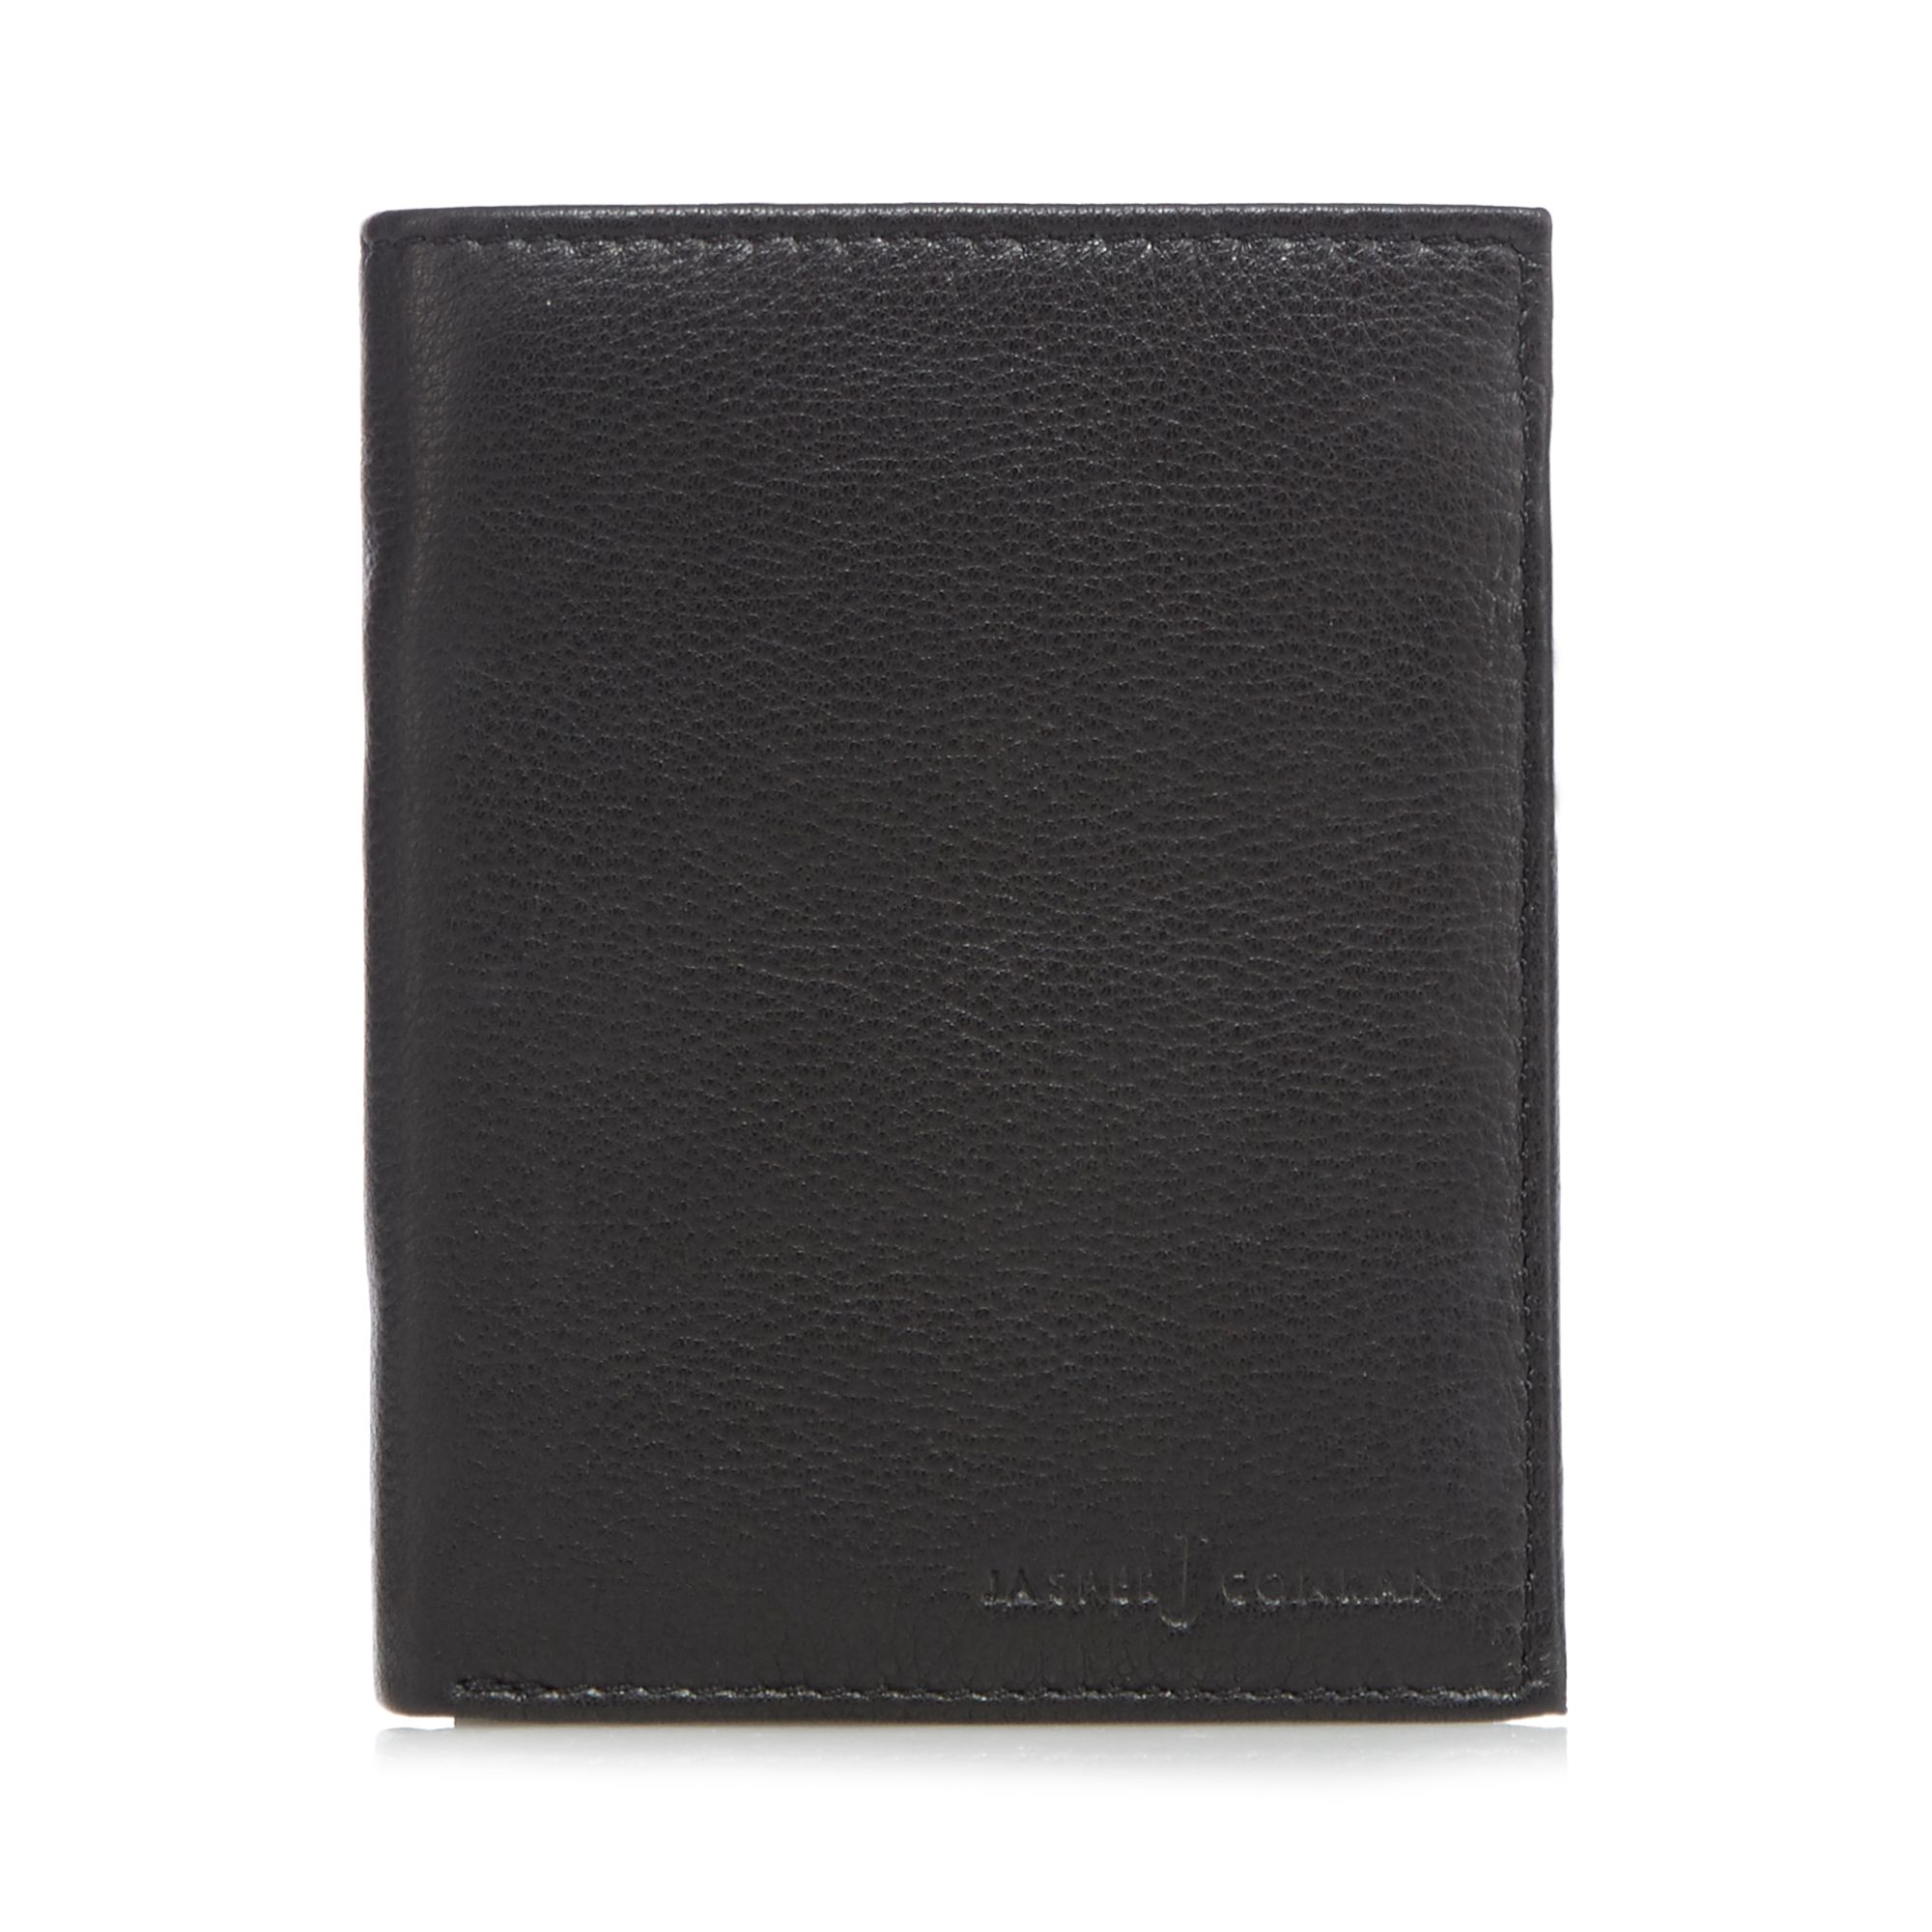 J By Jasper Conran Mens Black Leather Billfold Wallet In A Gift Box | eBay